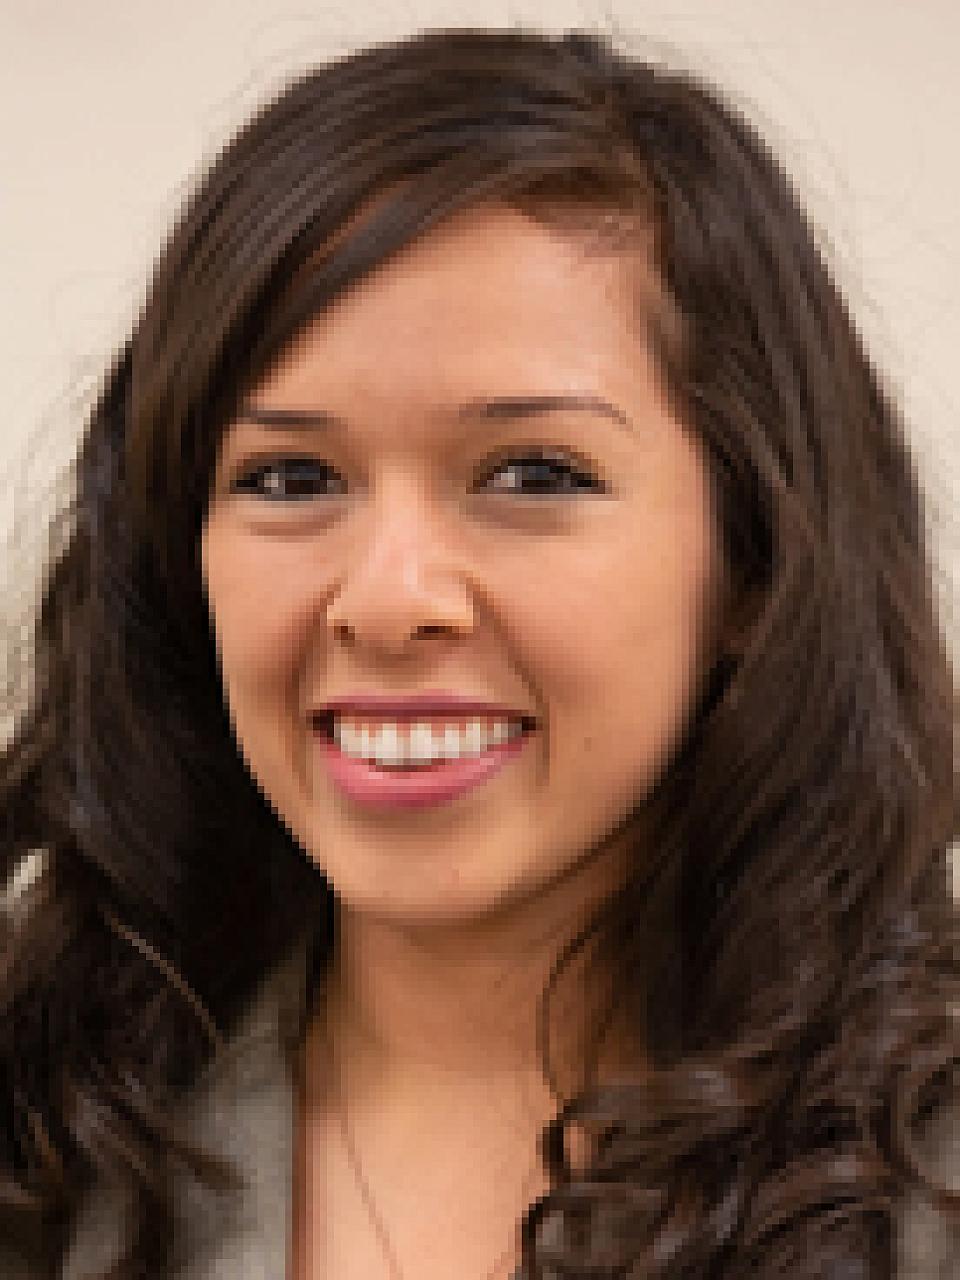 Jessica Morales